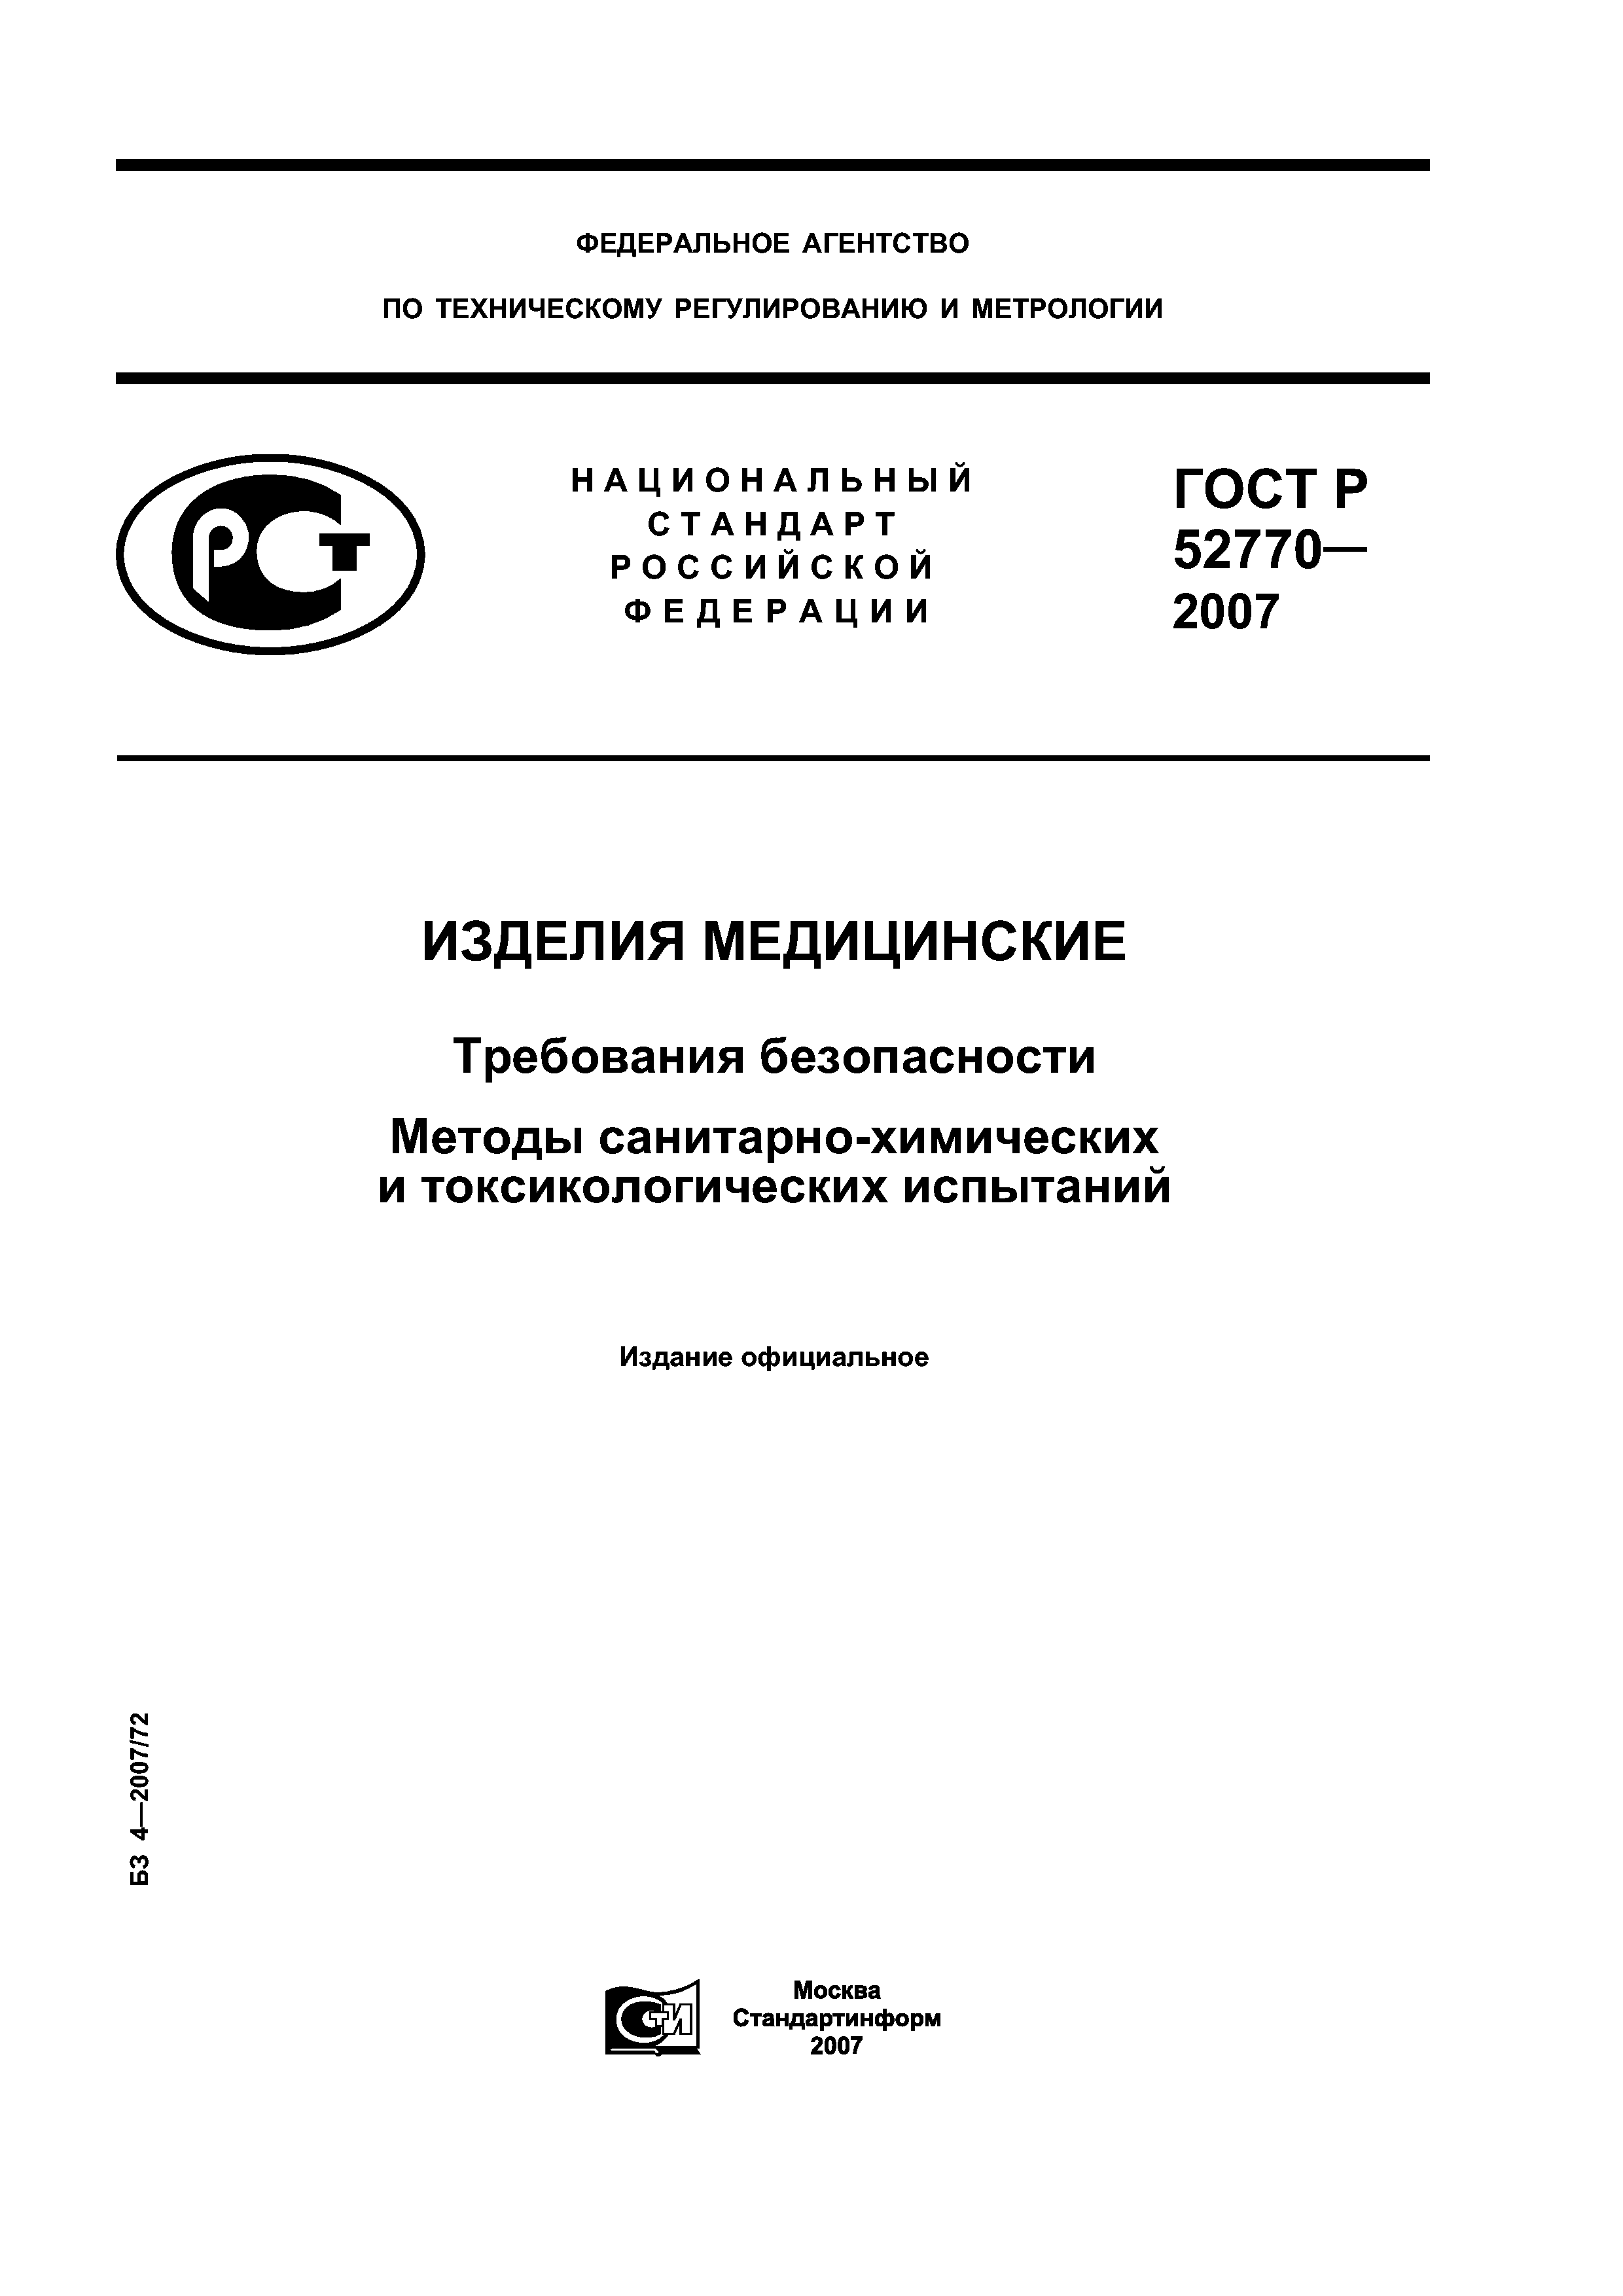 ГОСТ Р 52770-2007